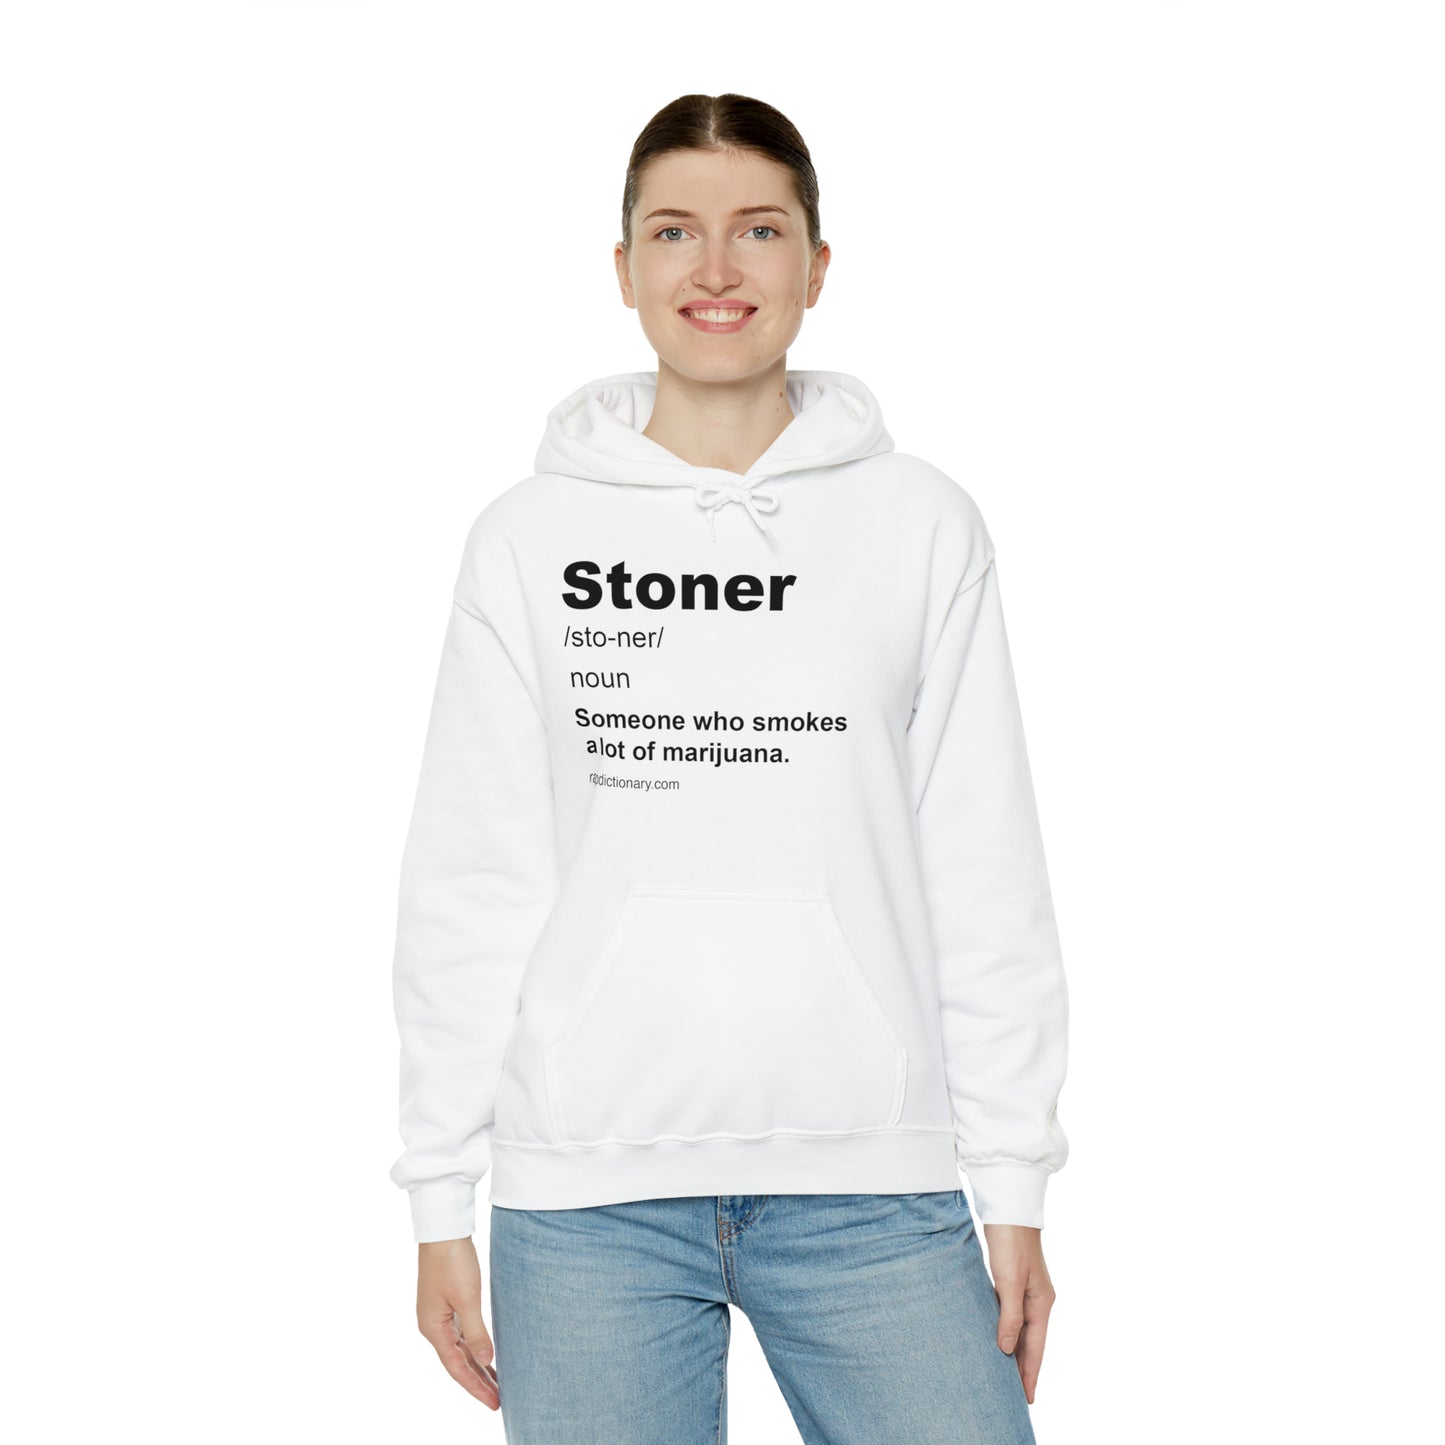 Stoner Definition Hoodie Sweatshirt